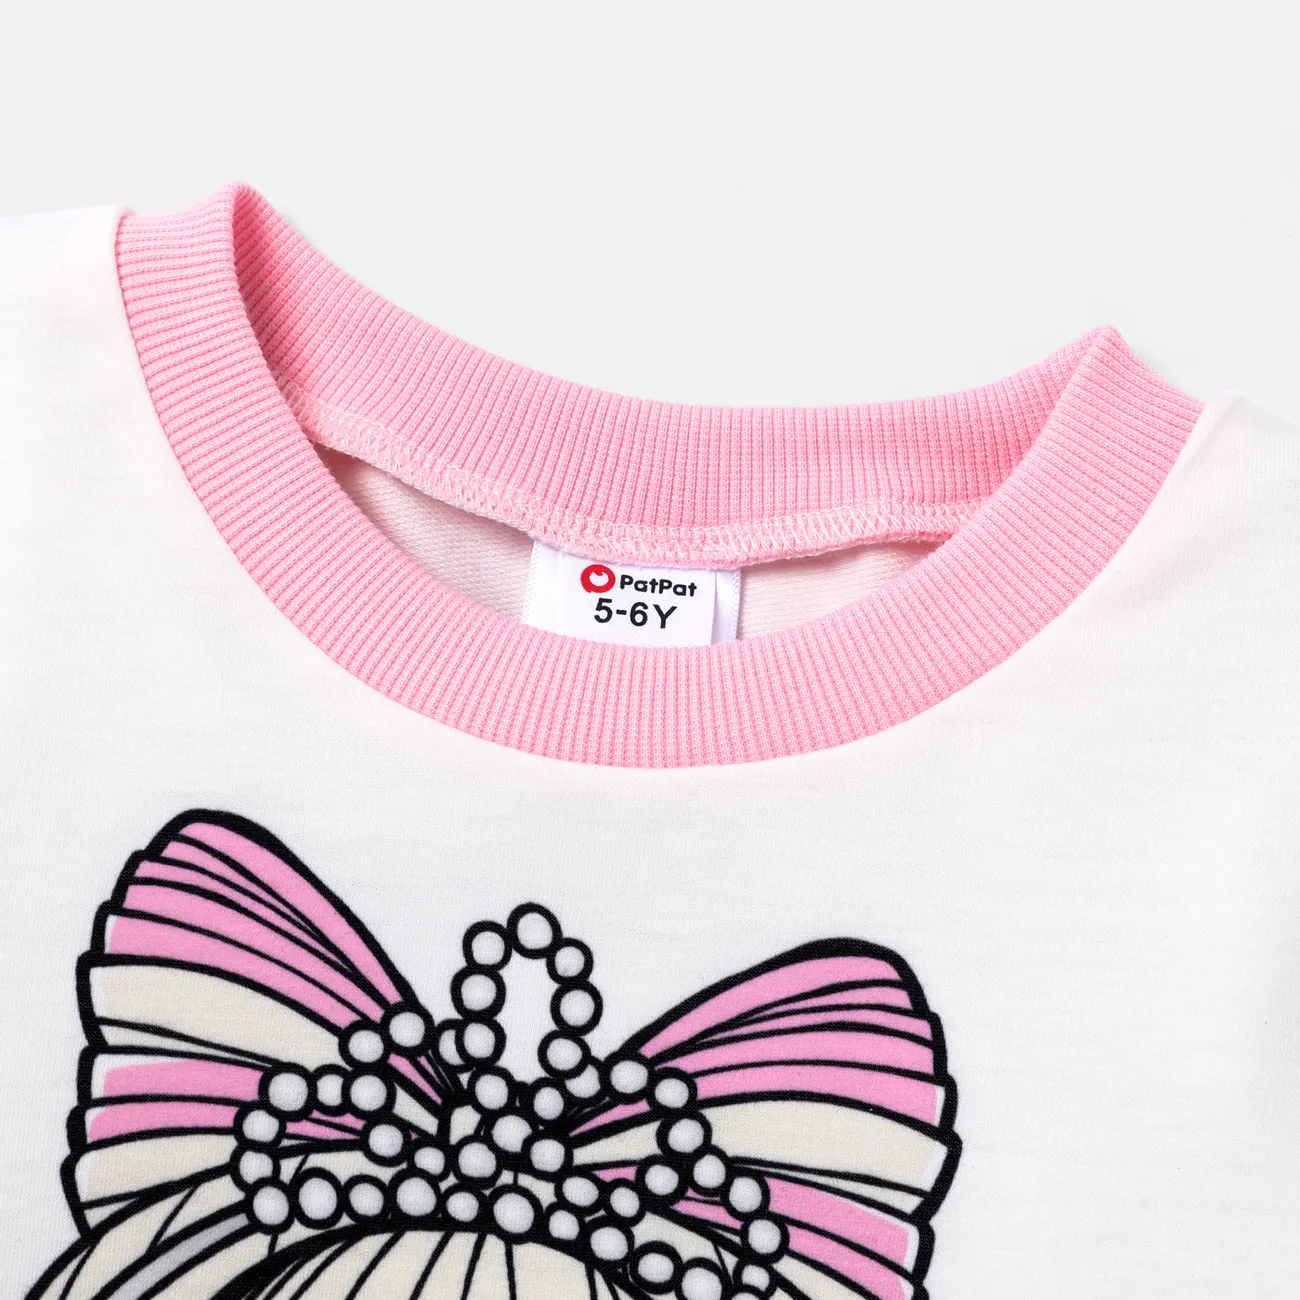 L.O.L. SURPRISE! Kid Girl 2pcs Character Print Long-sleeve Top and Plaid Skirt Set  Light Pink big image 1